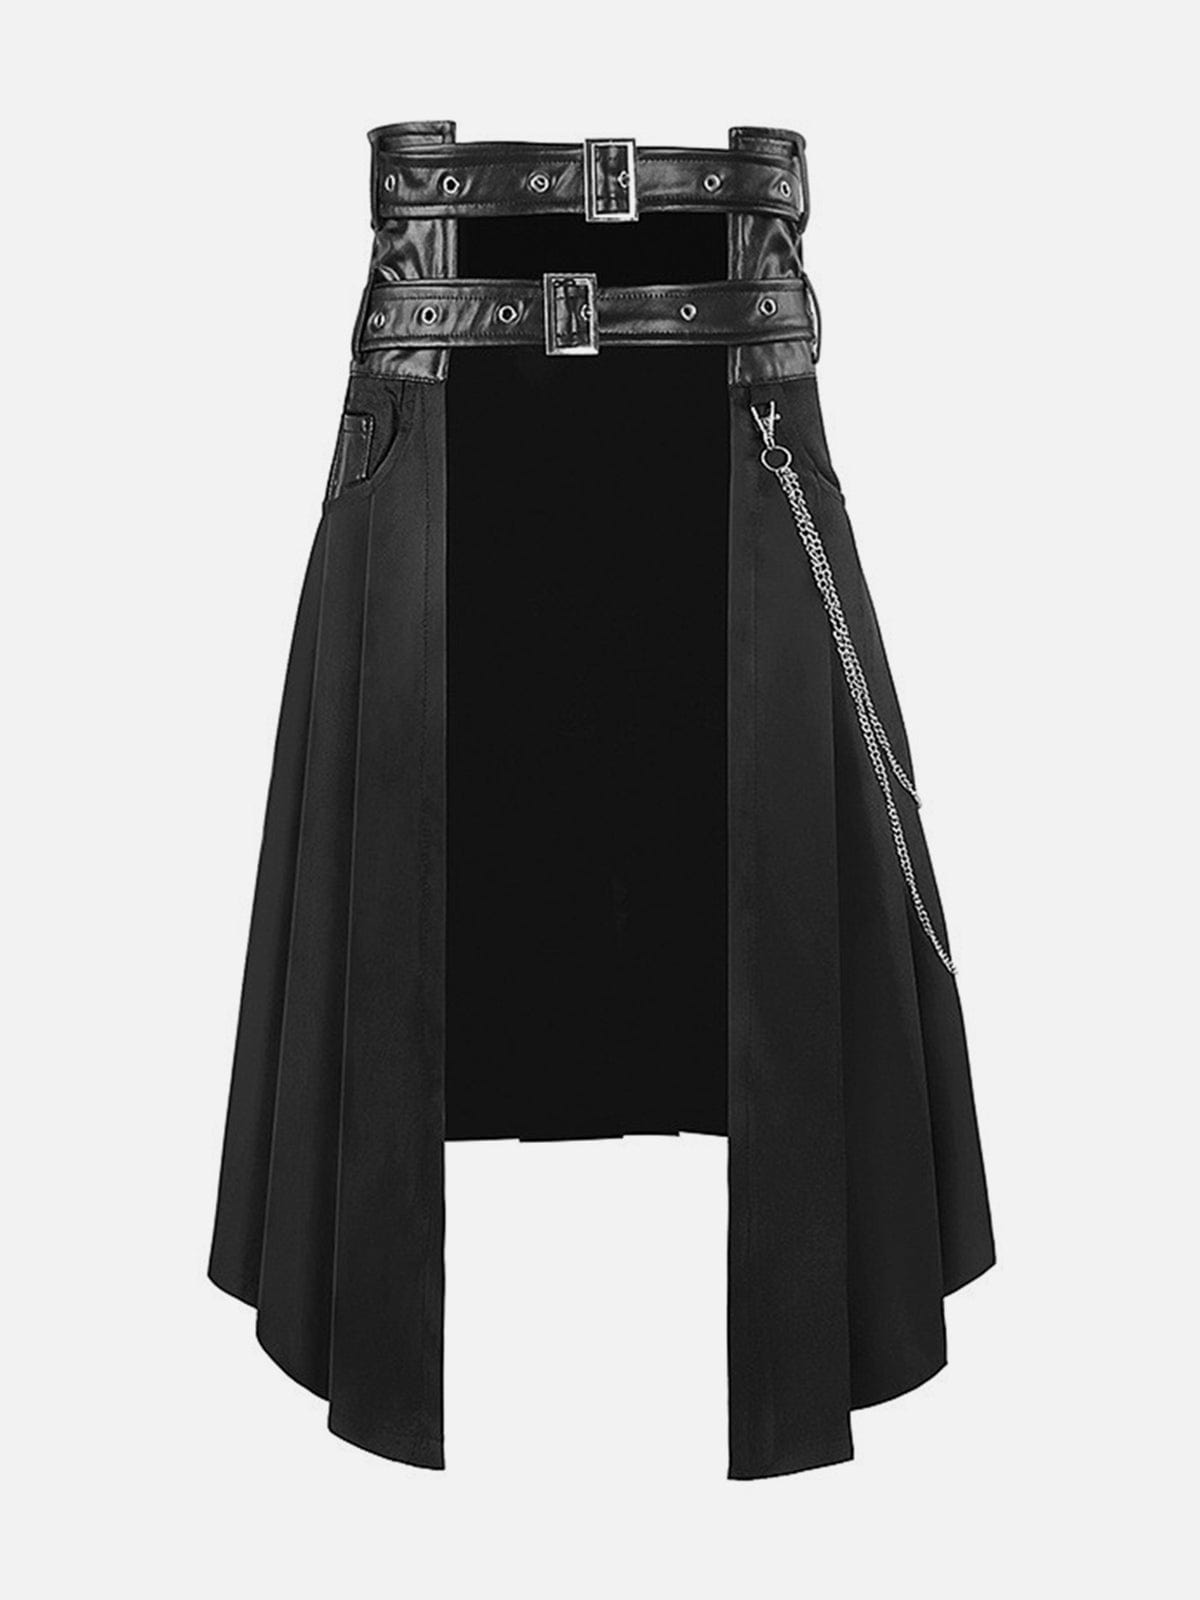 NEV Asymmetric Strappy Chain Pleated Skirt